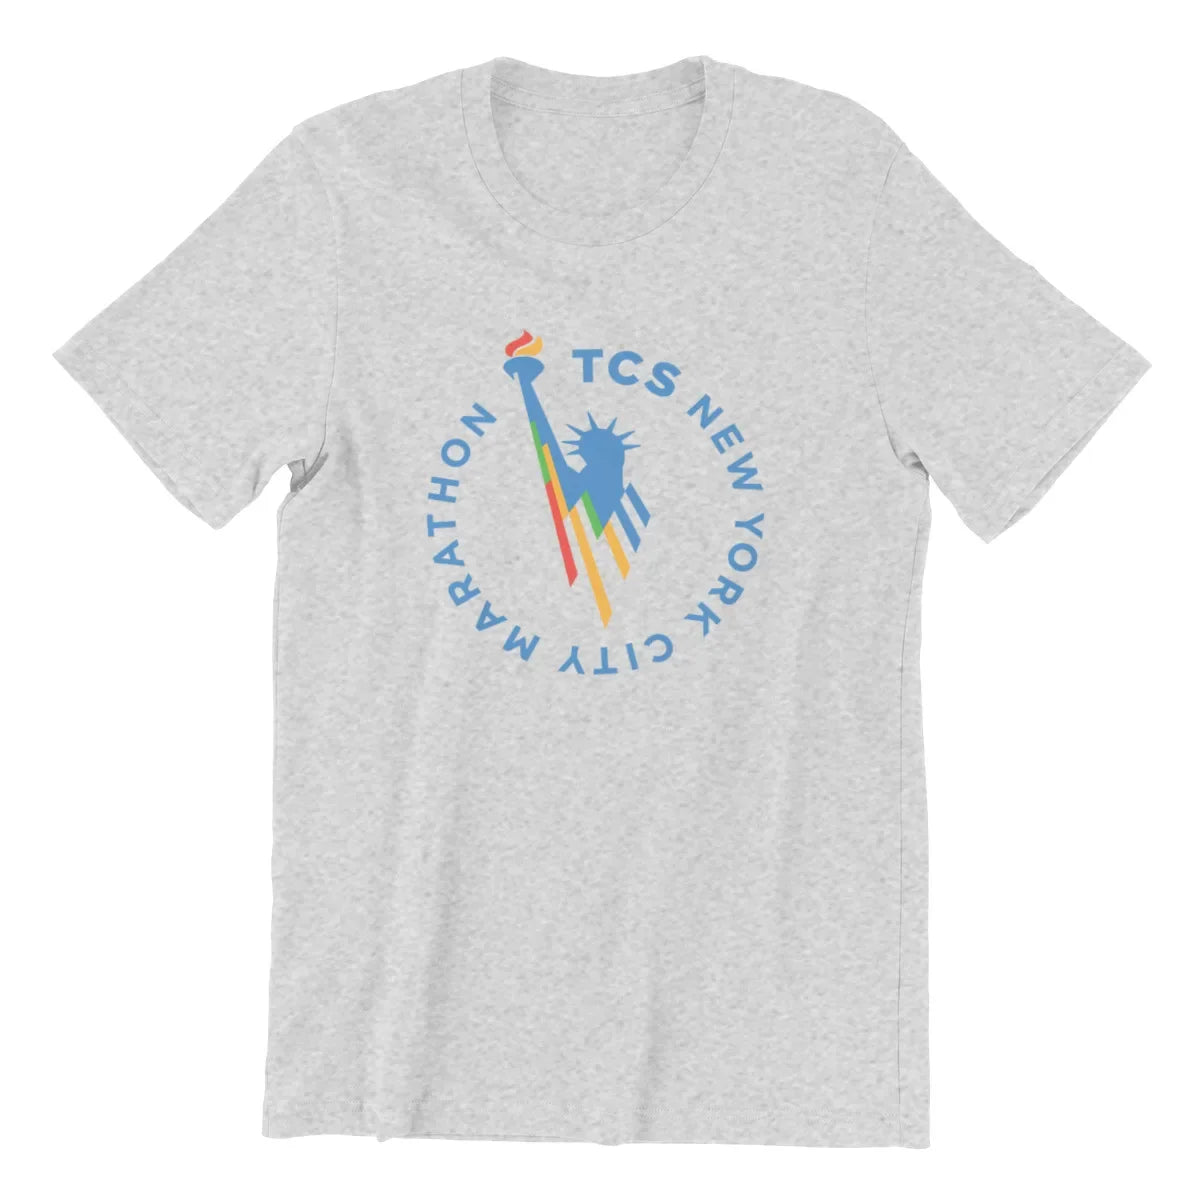 TCS New York City Marathon T-Shirt